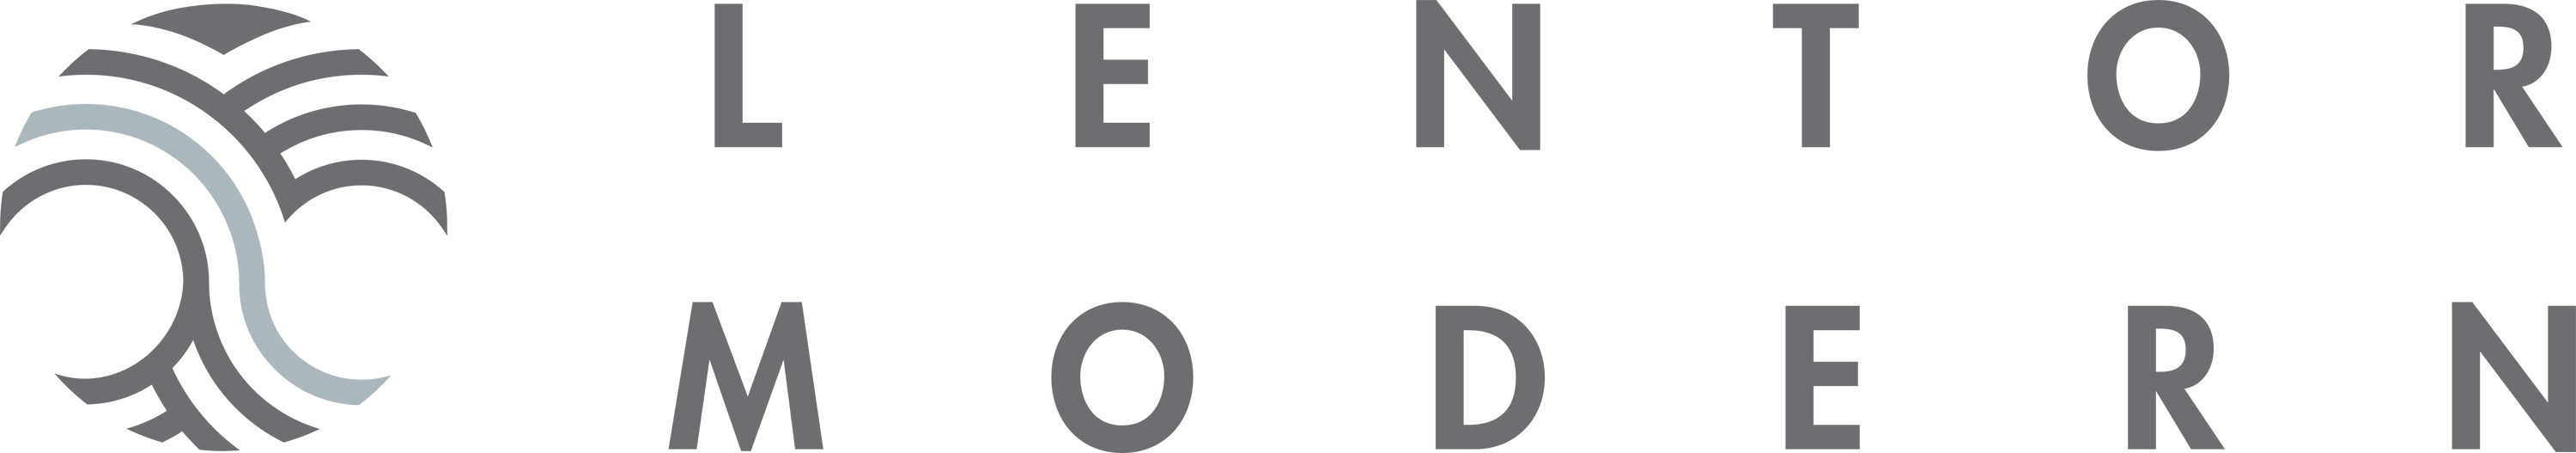 Lentor Modern Logo By Guocoland At Lentor Central